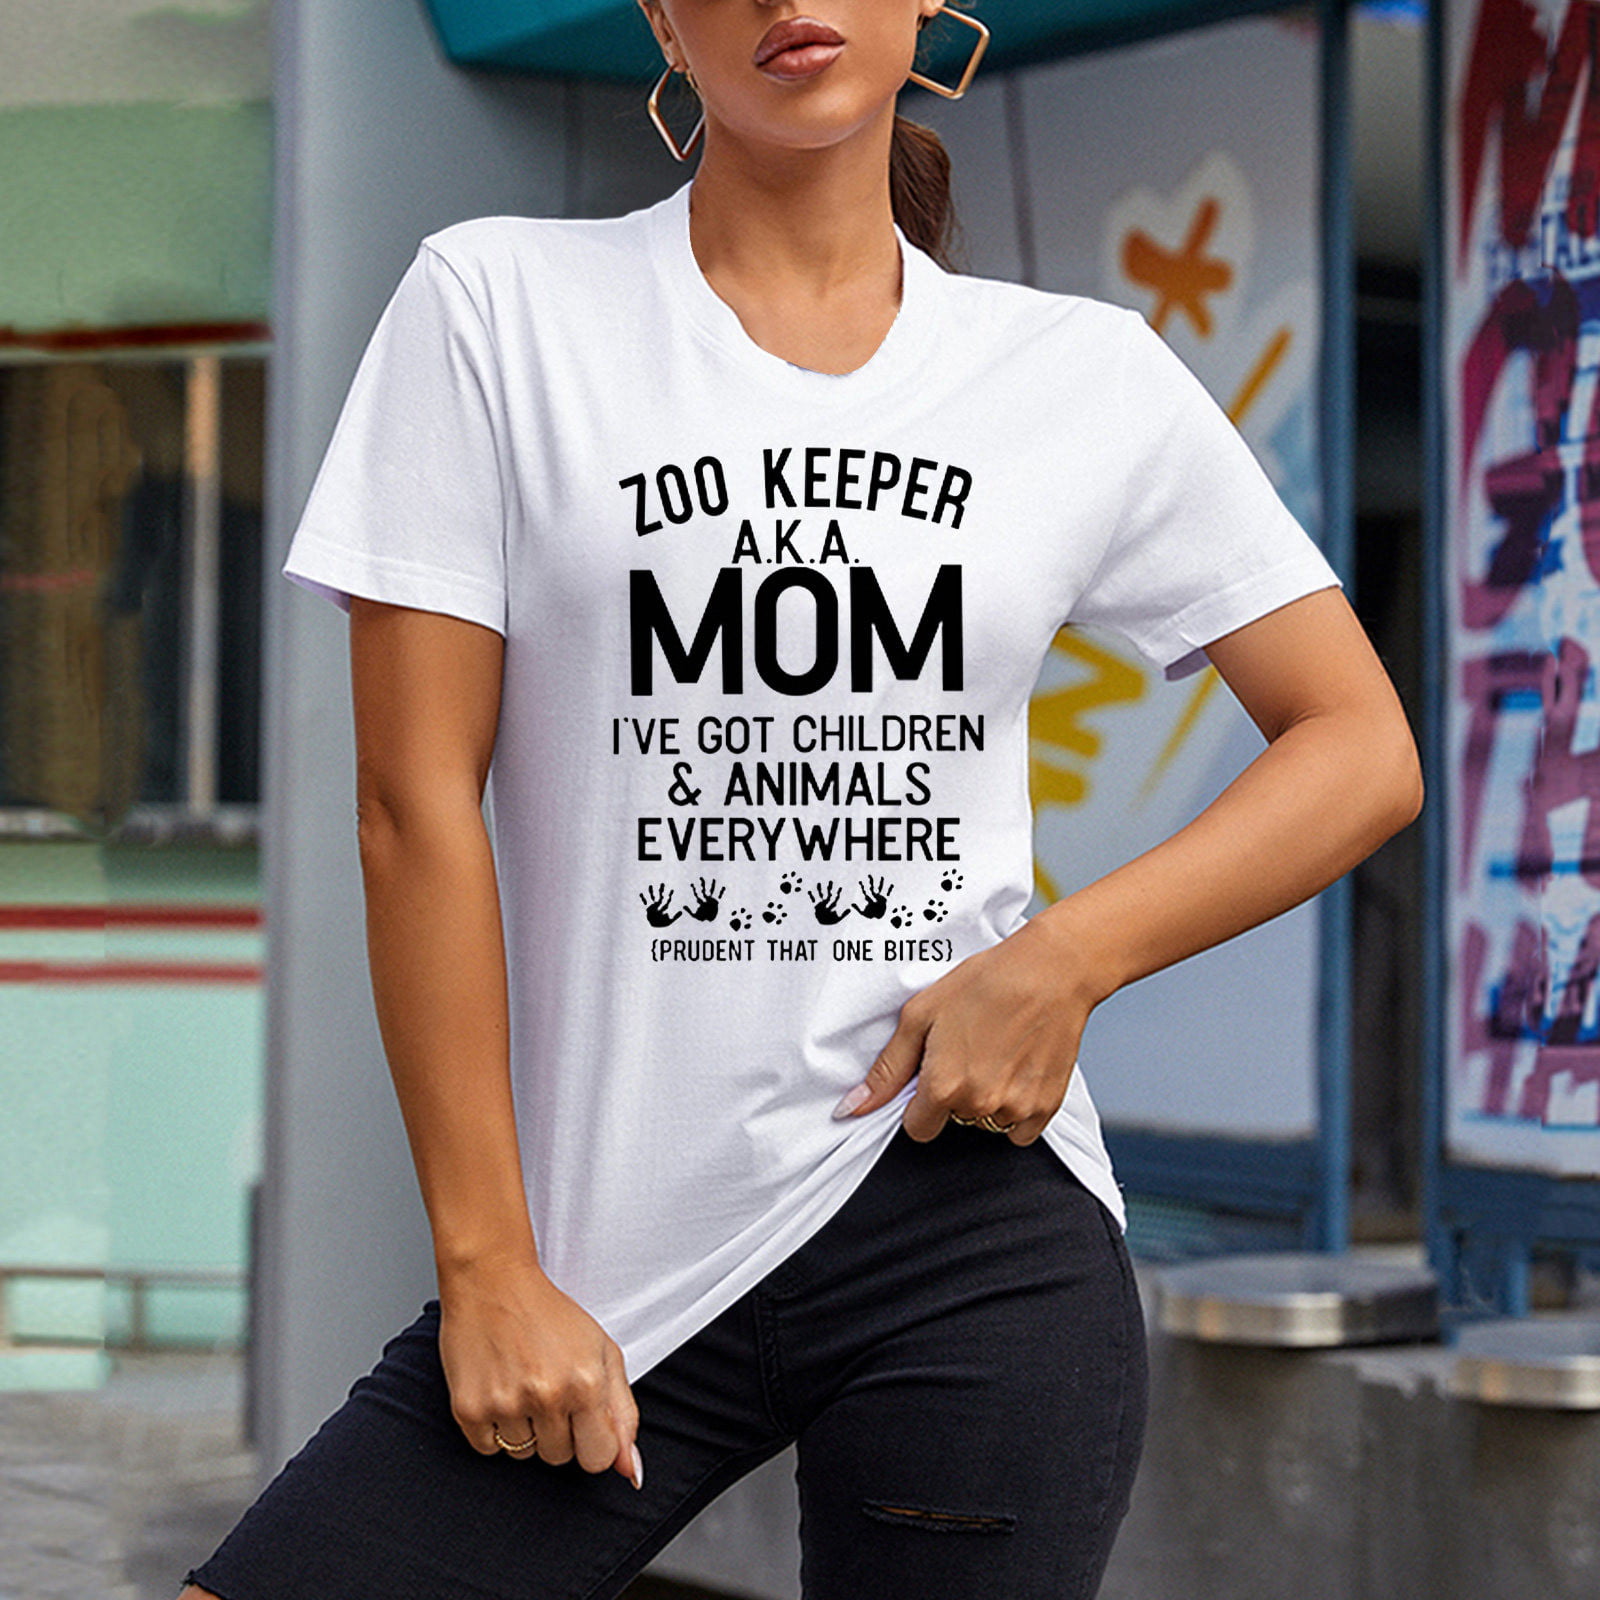 EveryWear Graphic T-Shirt for Women